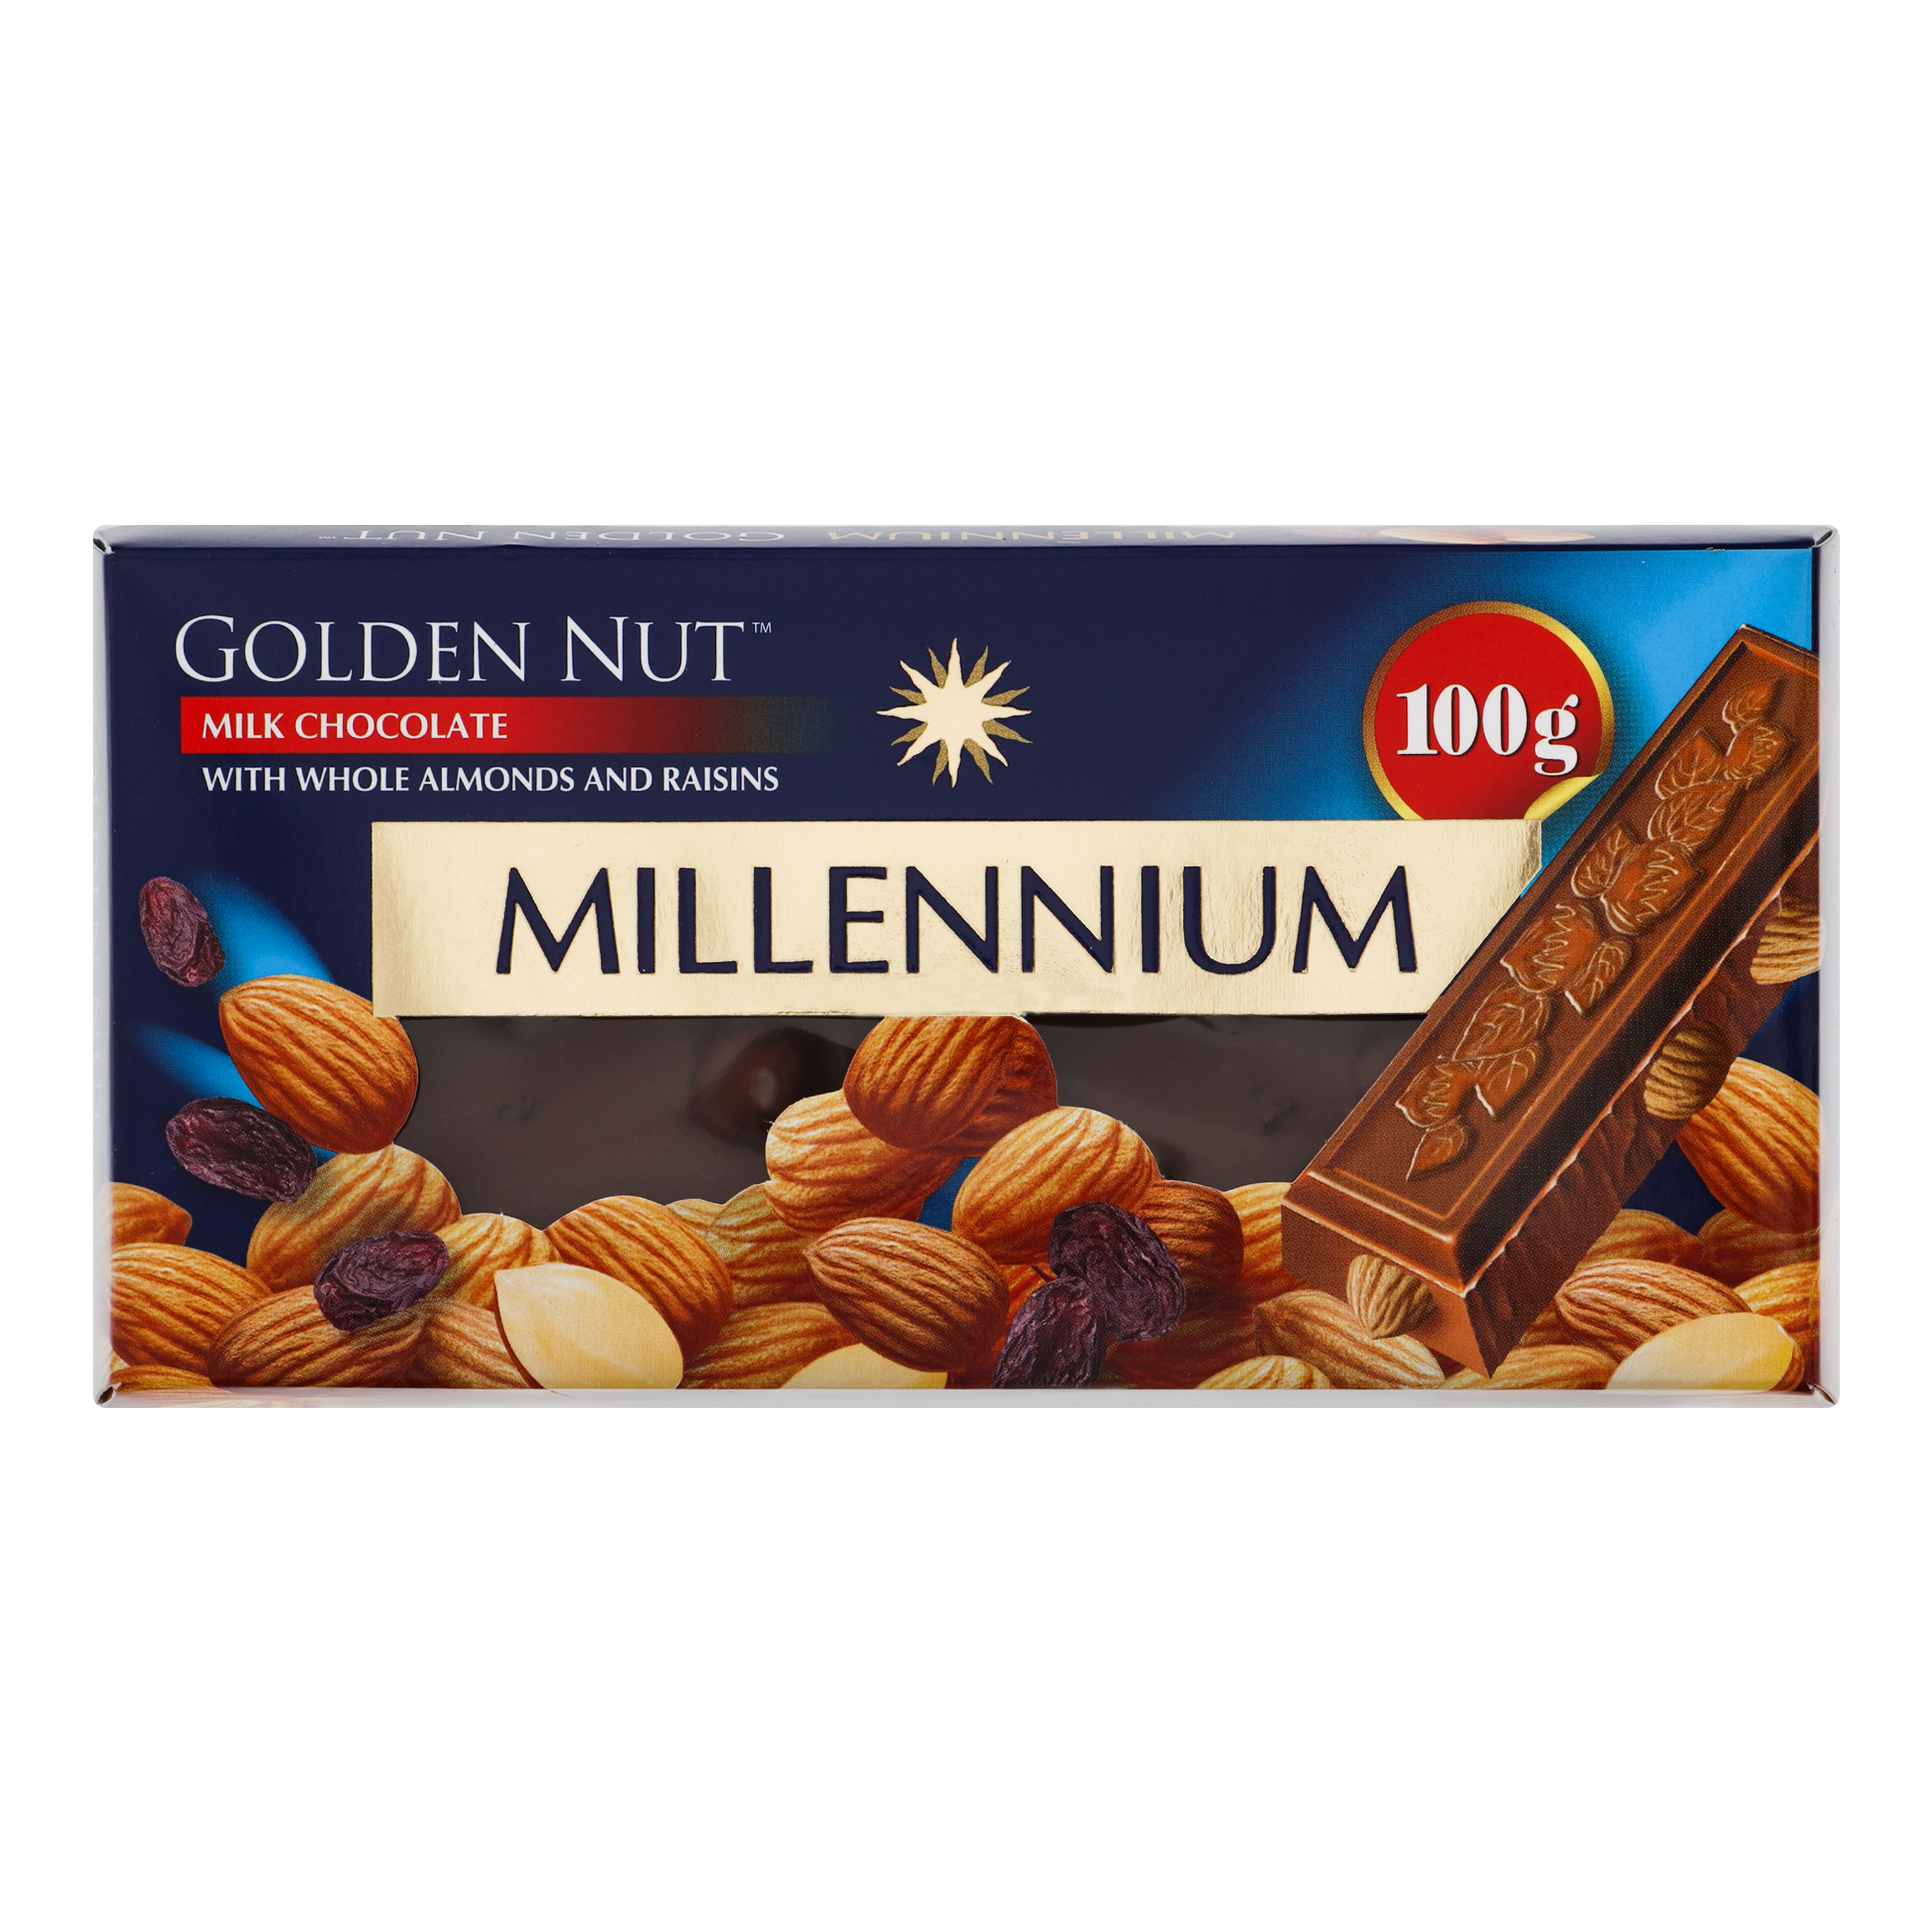 Millennium Gold Nut Milk Chocolate with Whole Almonds and Raisins 100g